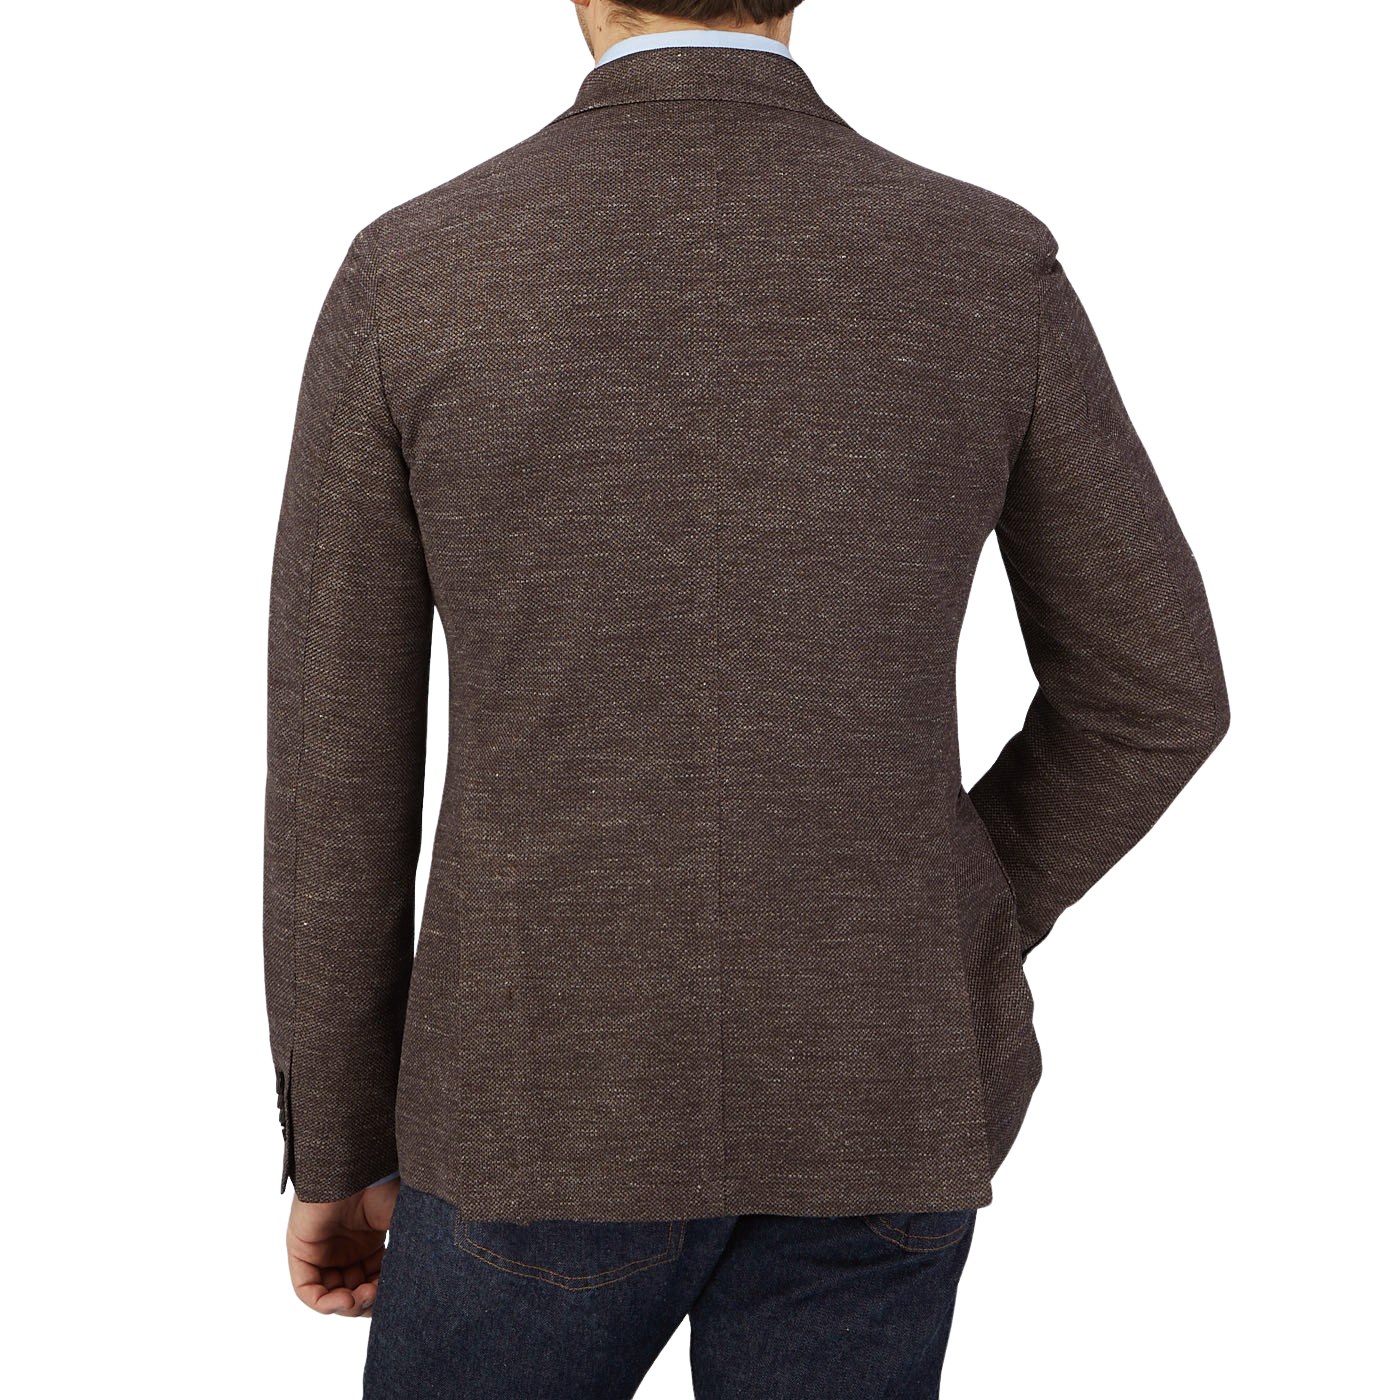 Luigi Bianchi wearing a Brown Melange Cotton Linen Jersey Blazer.